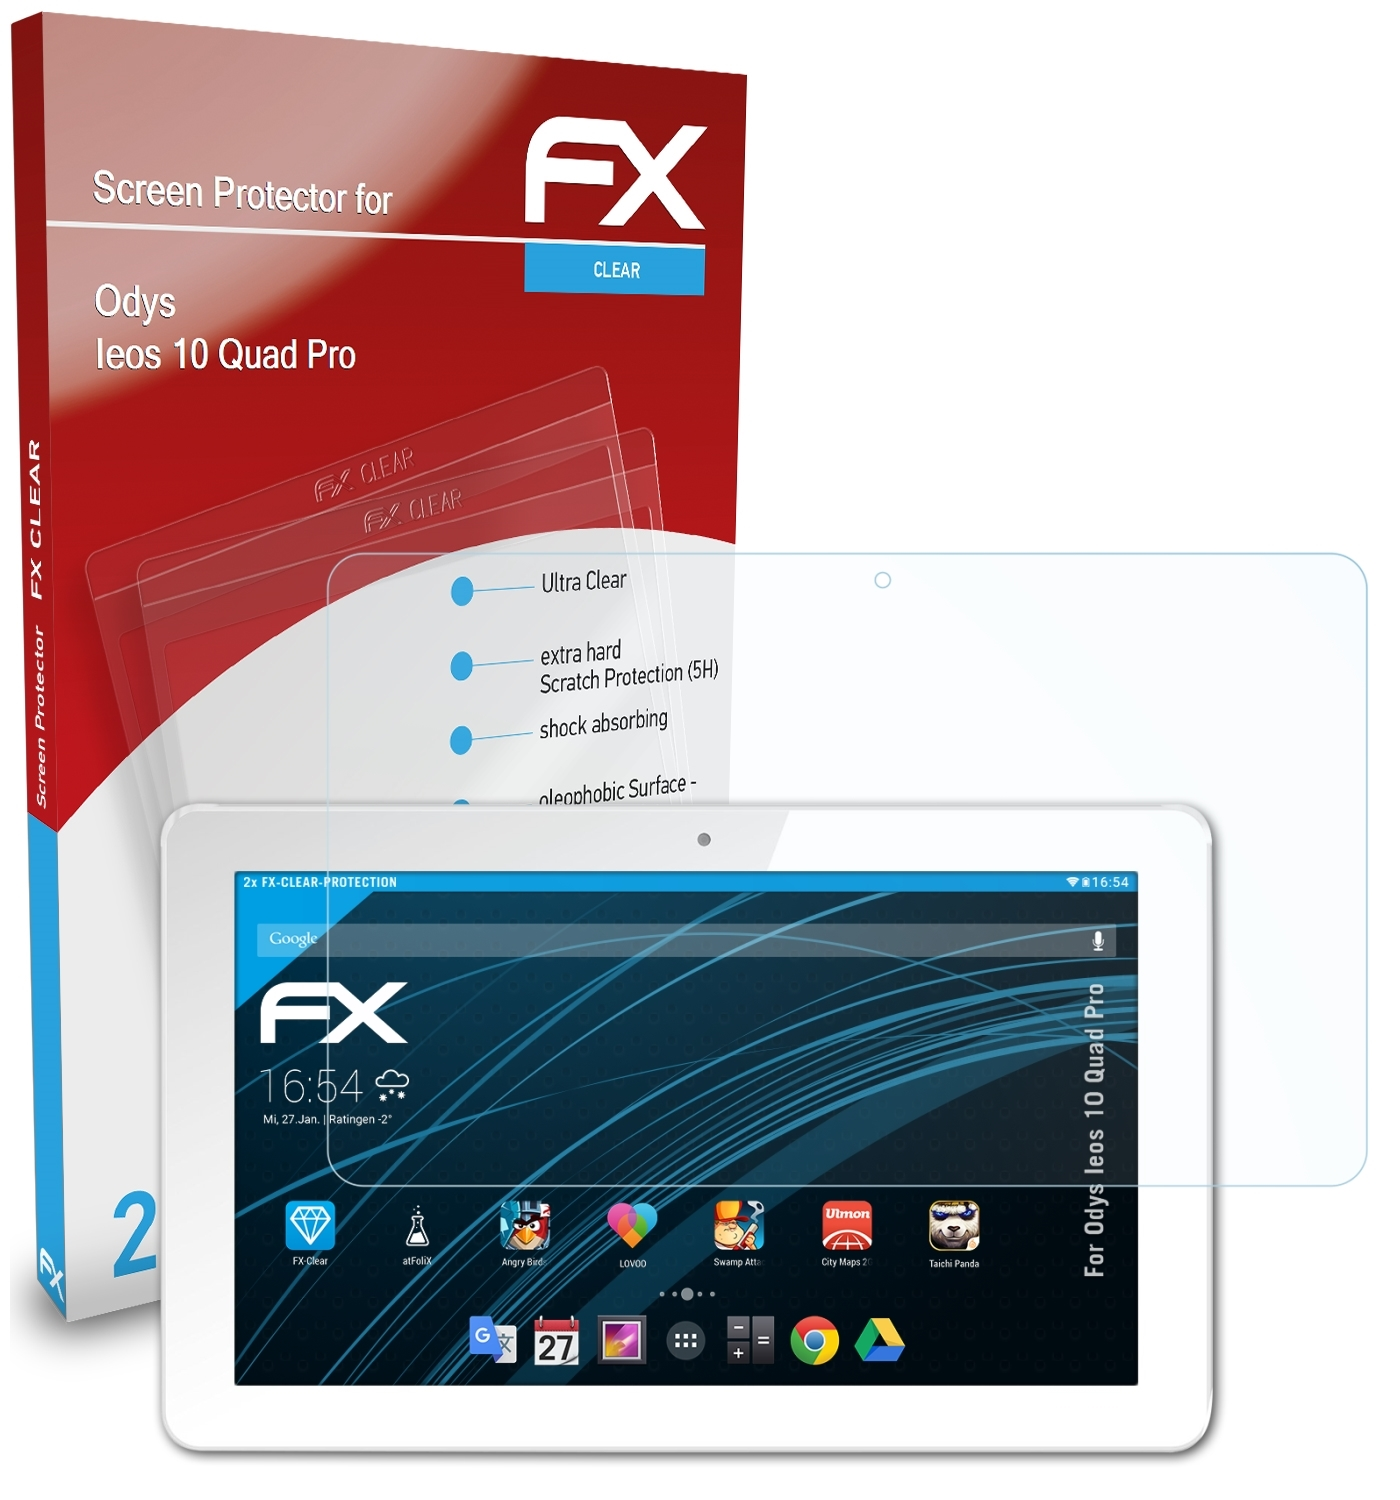 ATFOLIX 10 2x Quad Displayschutz(für Ieos Odys FX-Clear Pro)